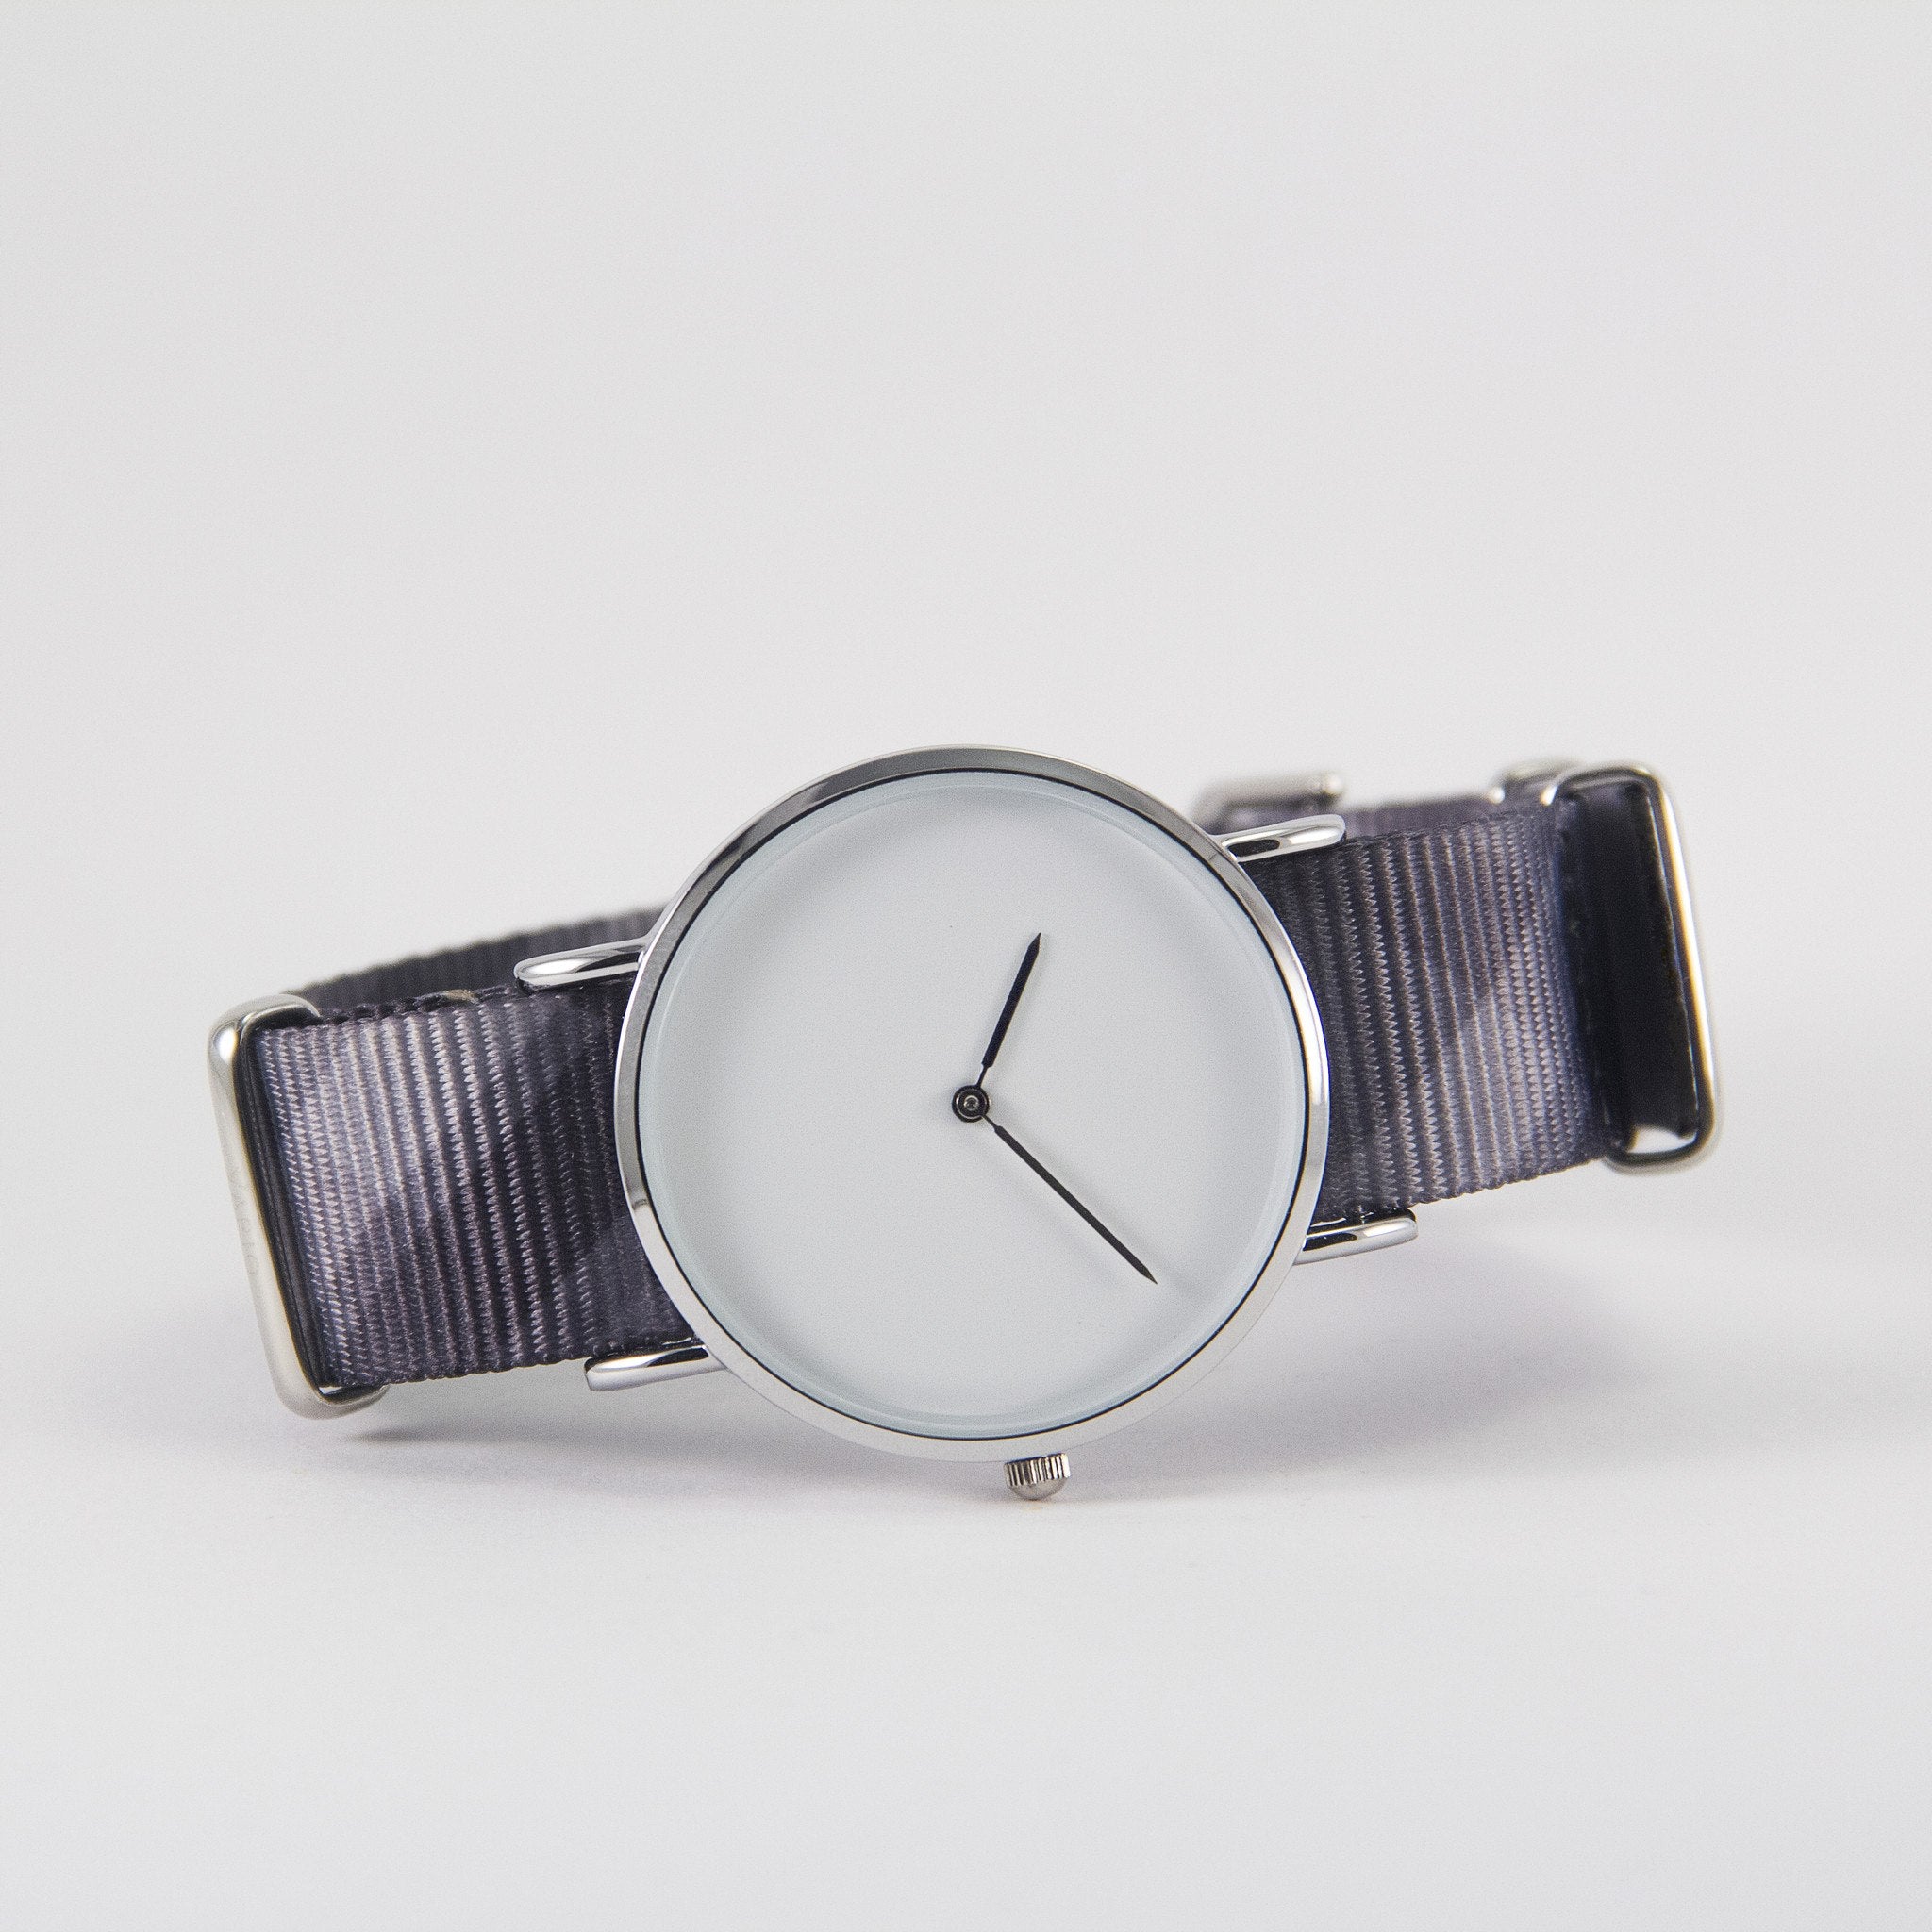 vario mono plaid strap with watch